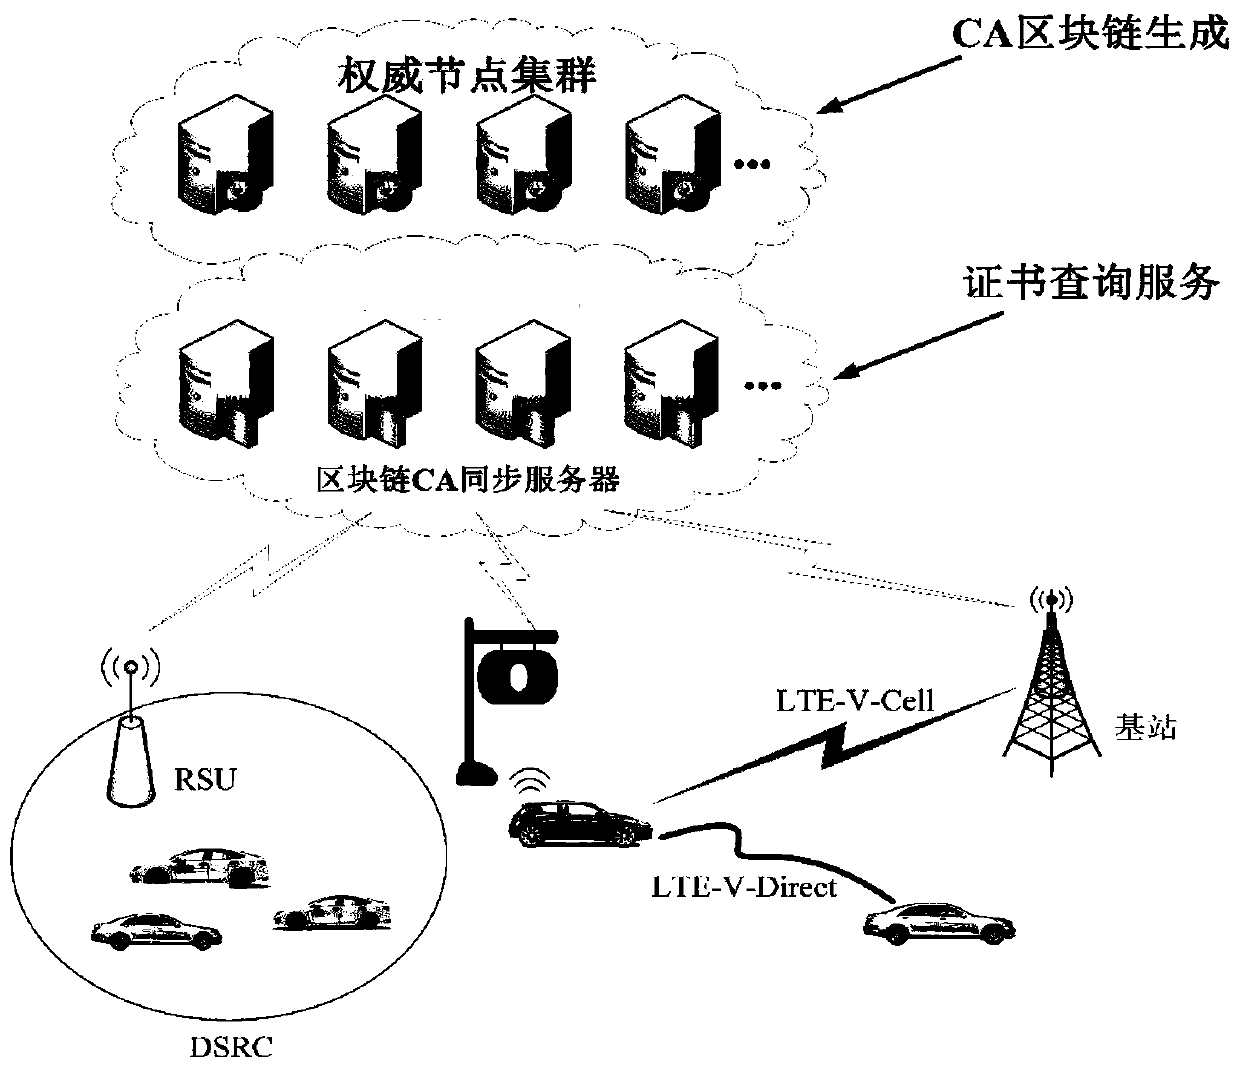 Internet of Vehicles equipment identity authentication method based on blockchain technology